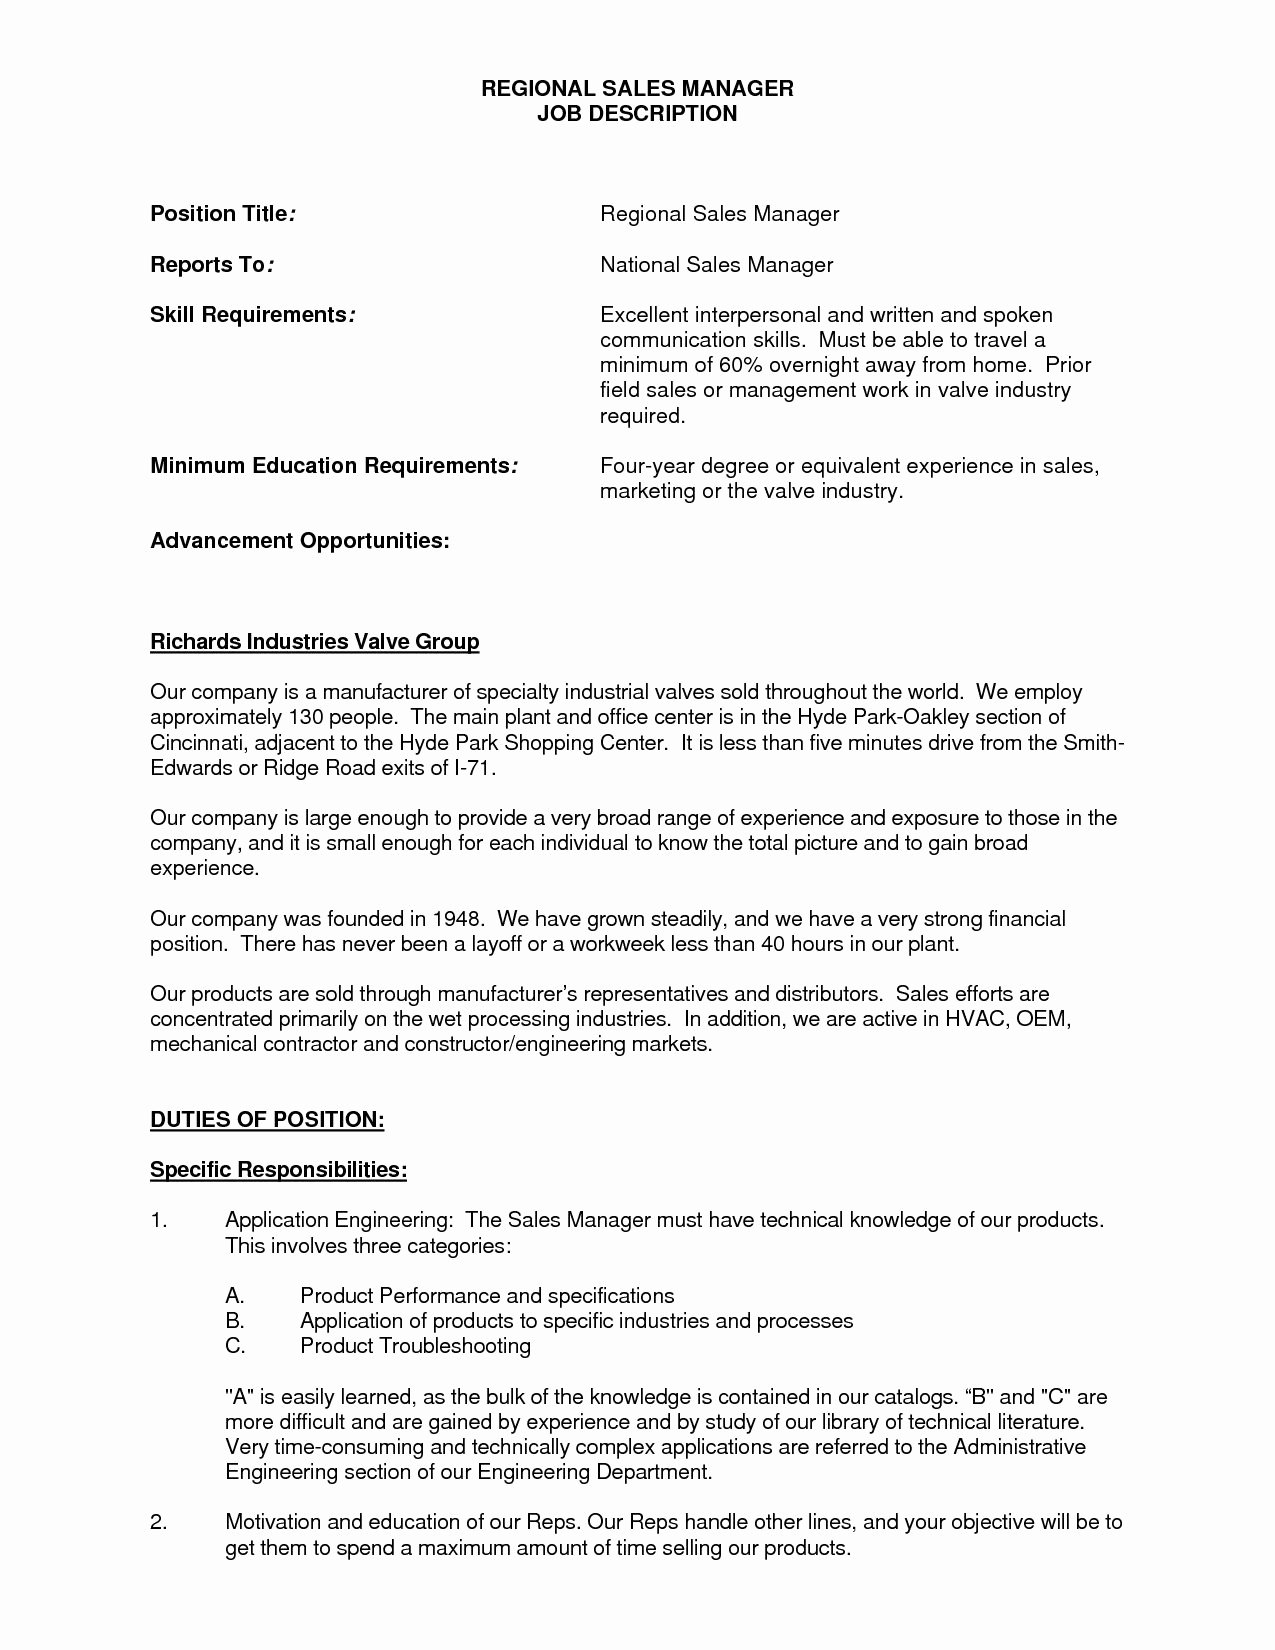 Regional Sales Manager Job Description Lovely Store Manager Job Description Resume Resume Ideas